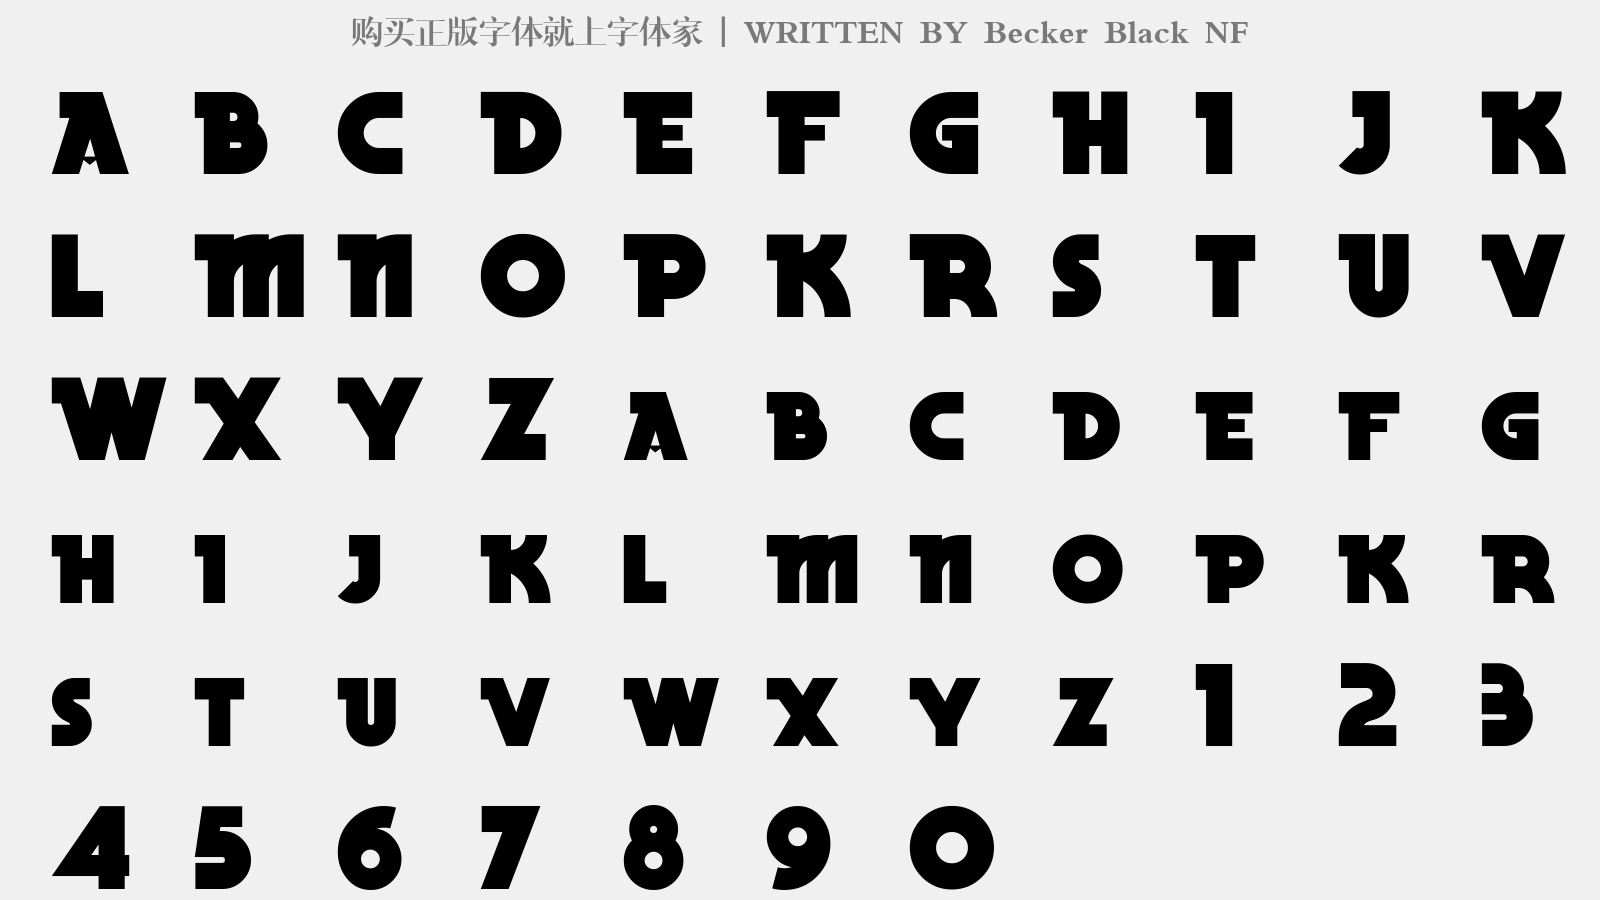 Becker Black NF - 大写字母/小写字母/数字